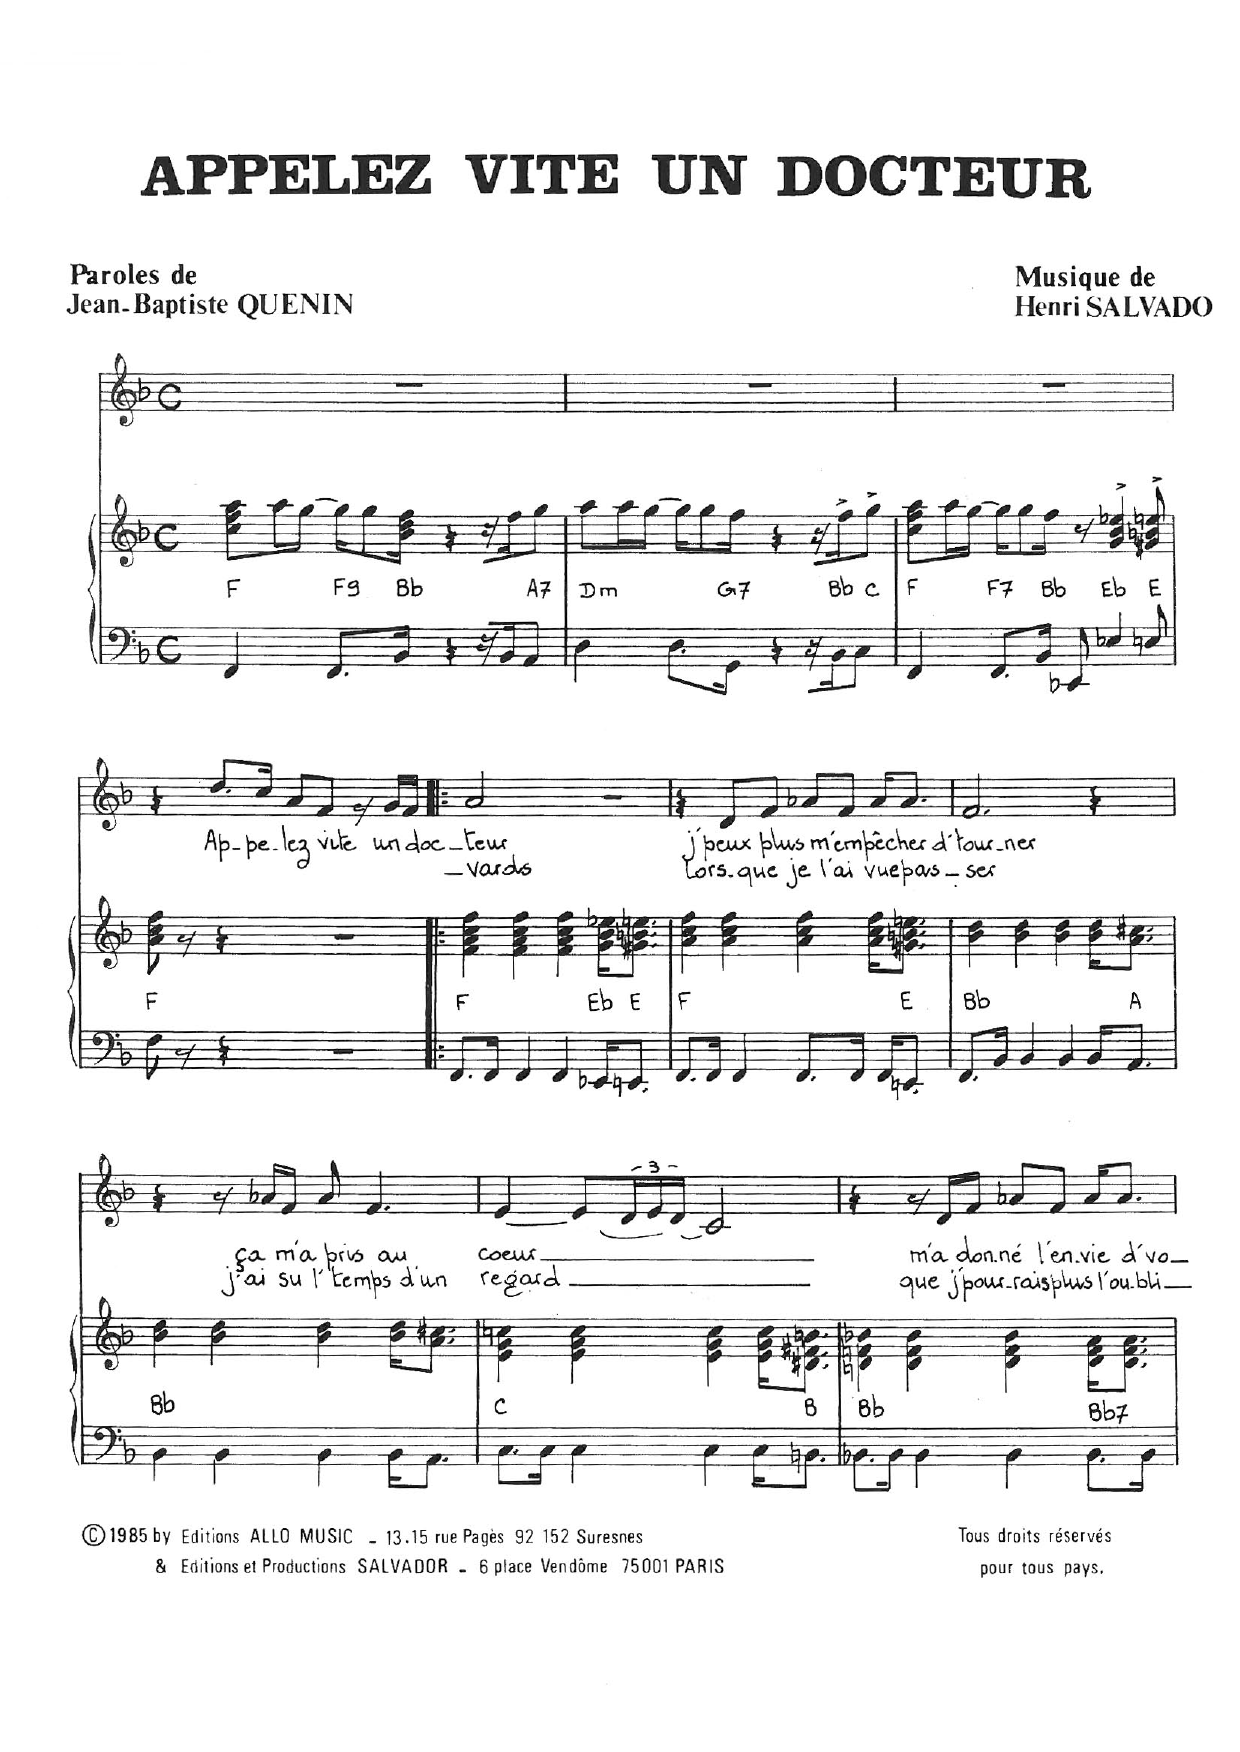 Henri Salvador Appelez Vite Un Docteur sheet music notes and chords arranged for Piano & Vocal